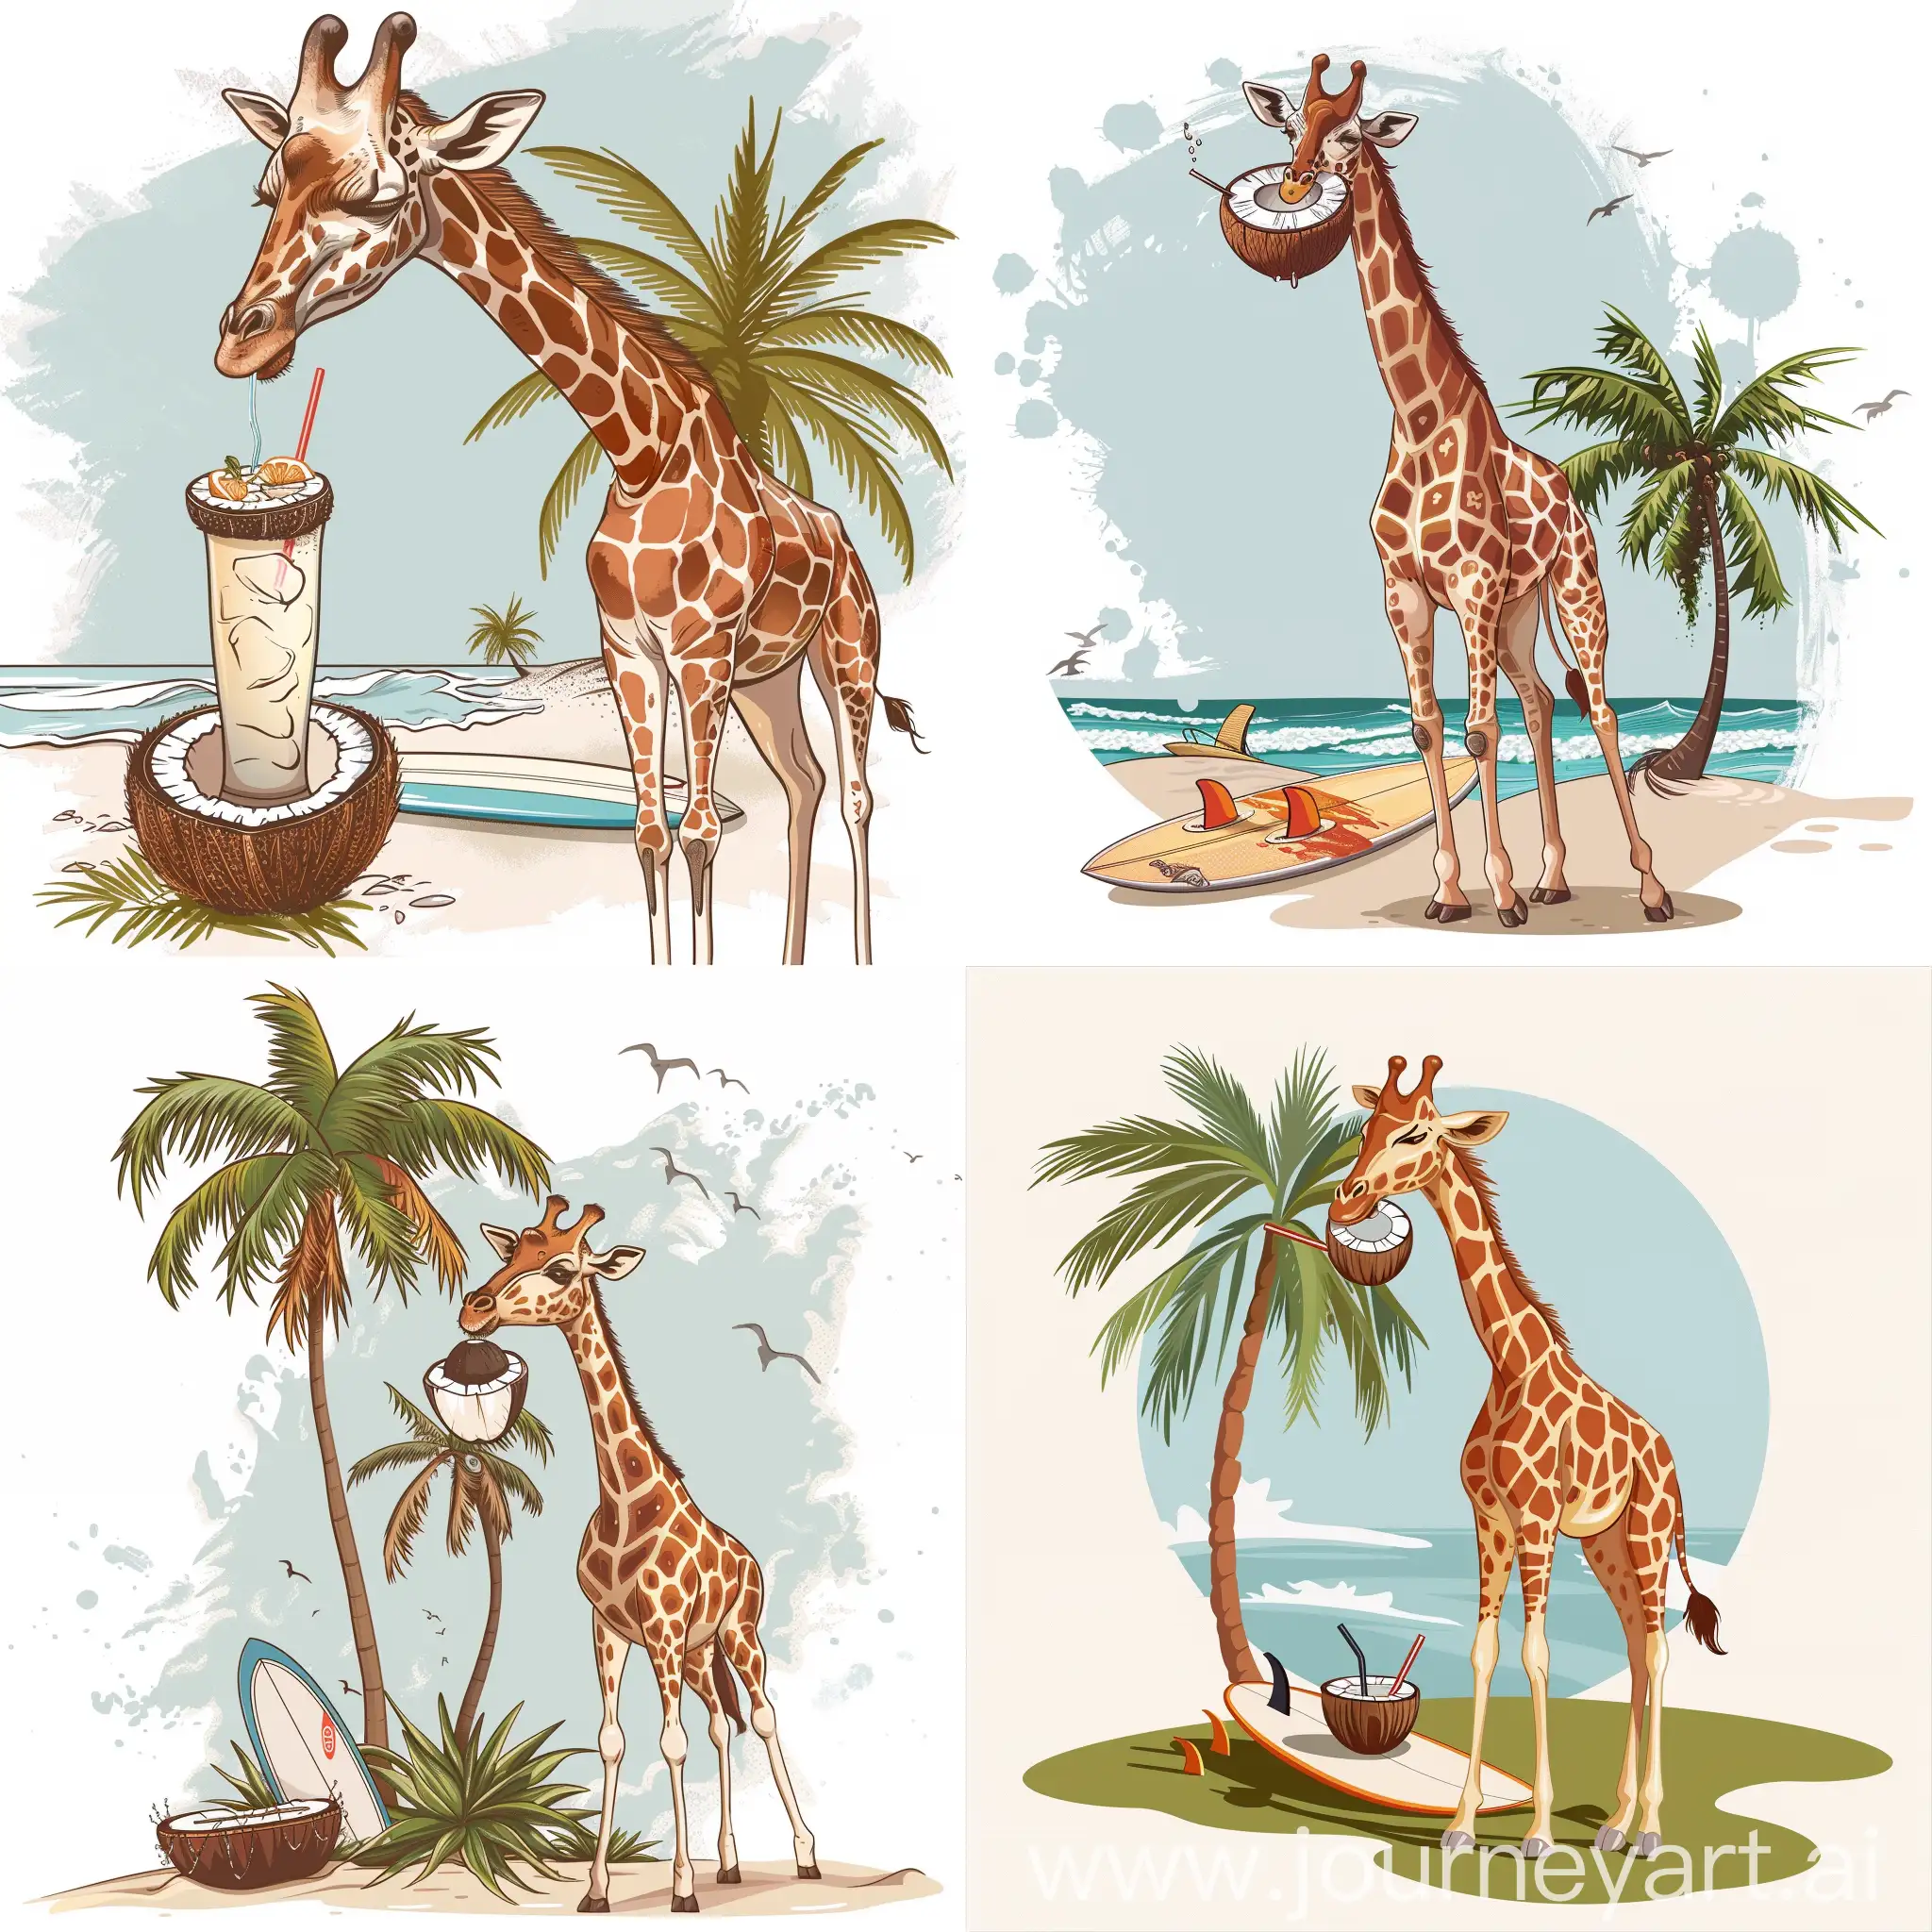 Graceful-Giraffe-Enjoying-Coconut-Cocktail-by-the-Beach